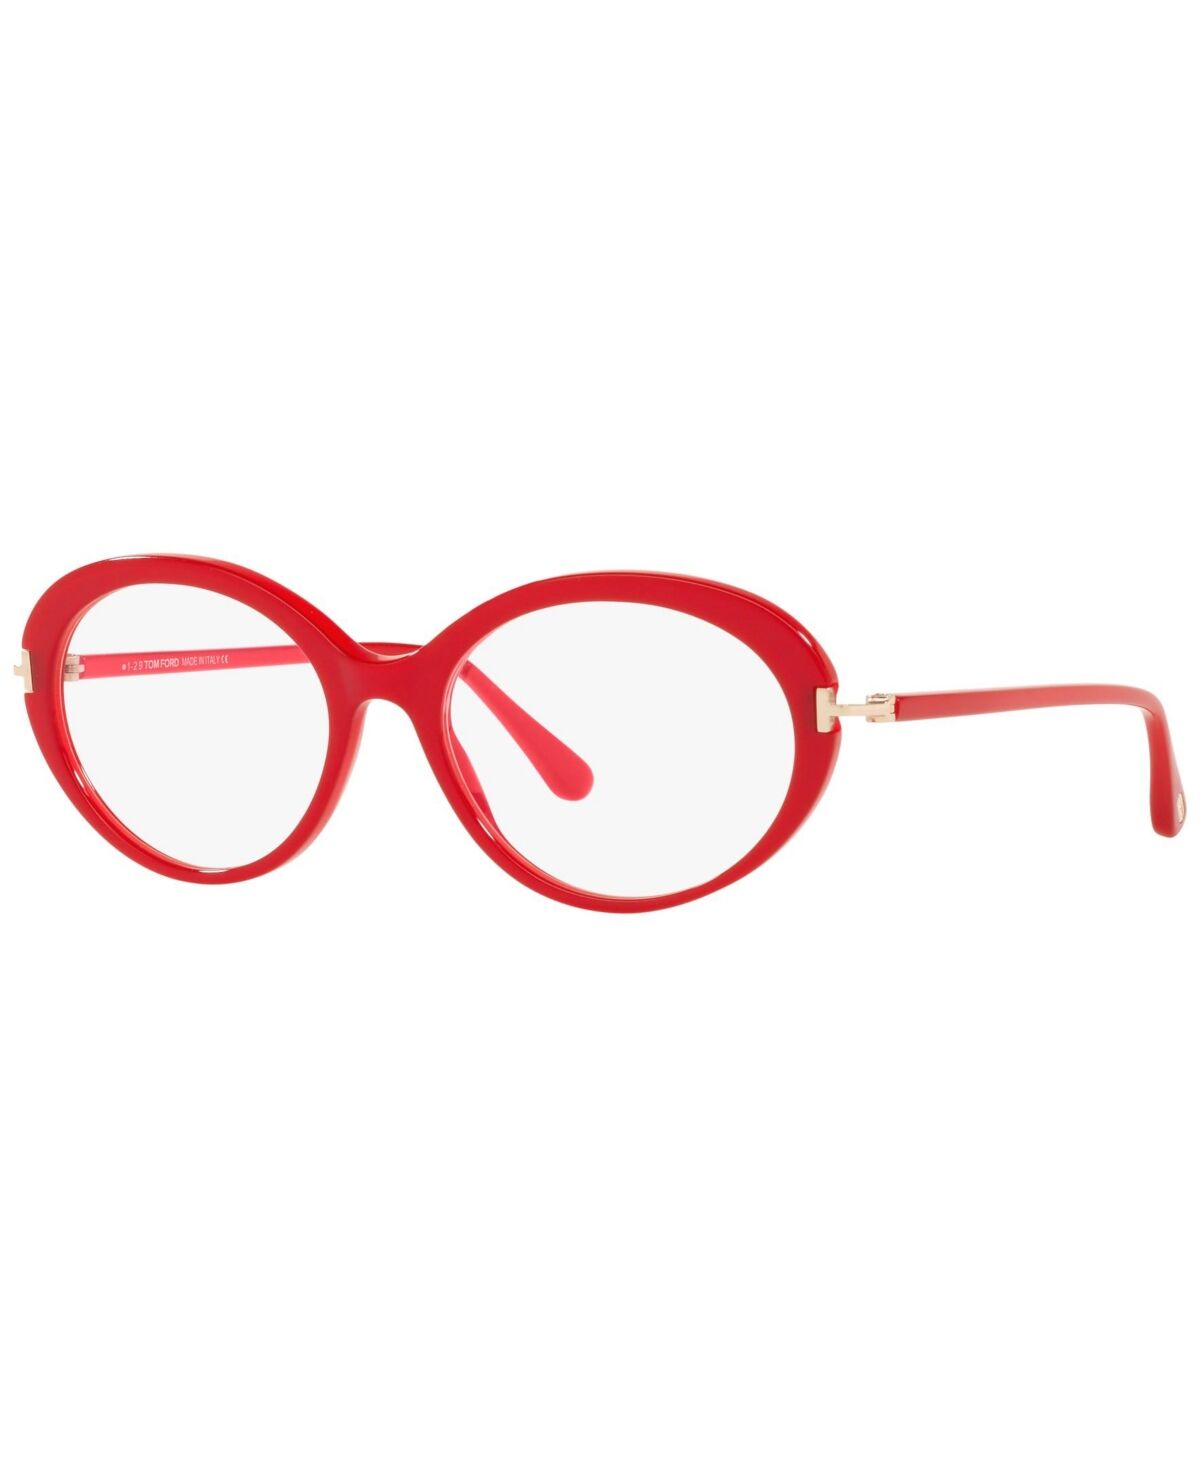 Tom Ford TR001215 Women's Round Eyeglasses - Red